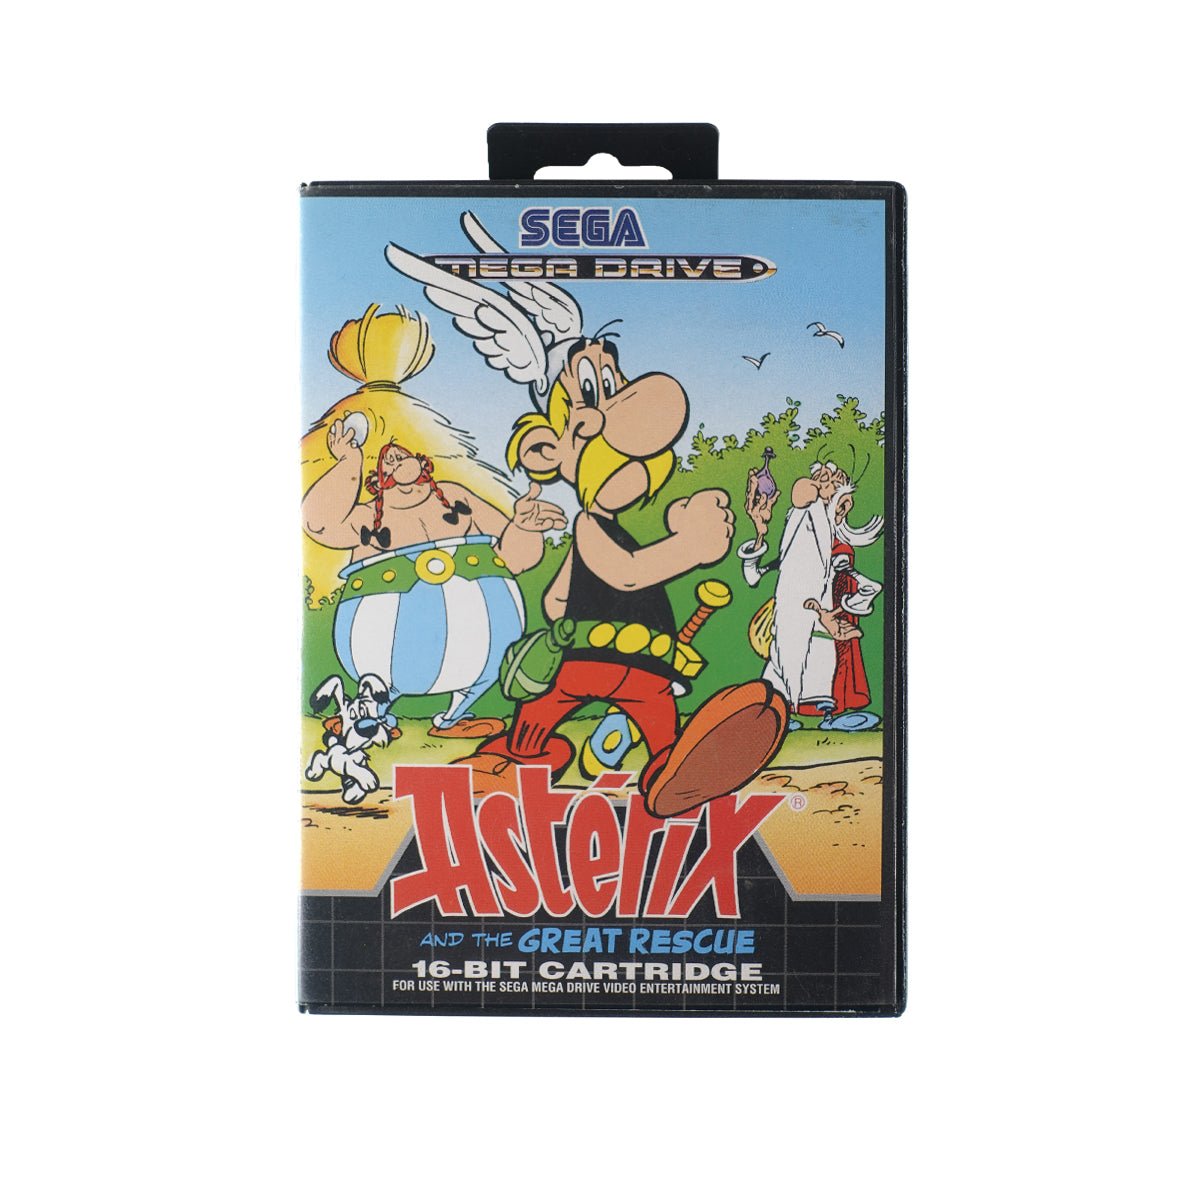 (Pre-Owned) Asterix and the Great Rescue - Sega Mega Drive - ريترو - Store 974 | ستور ٩٧٤